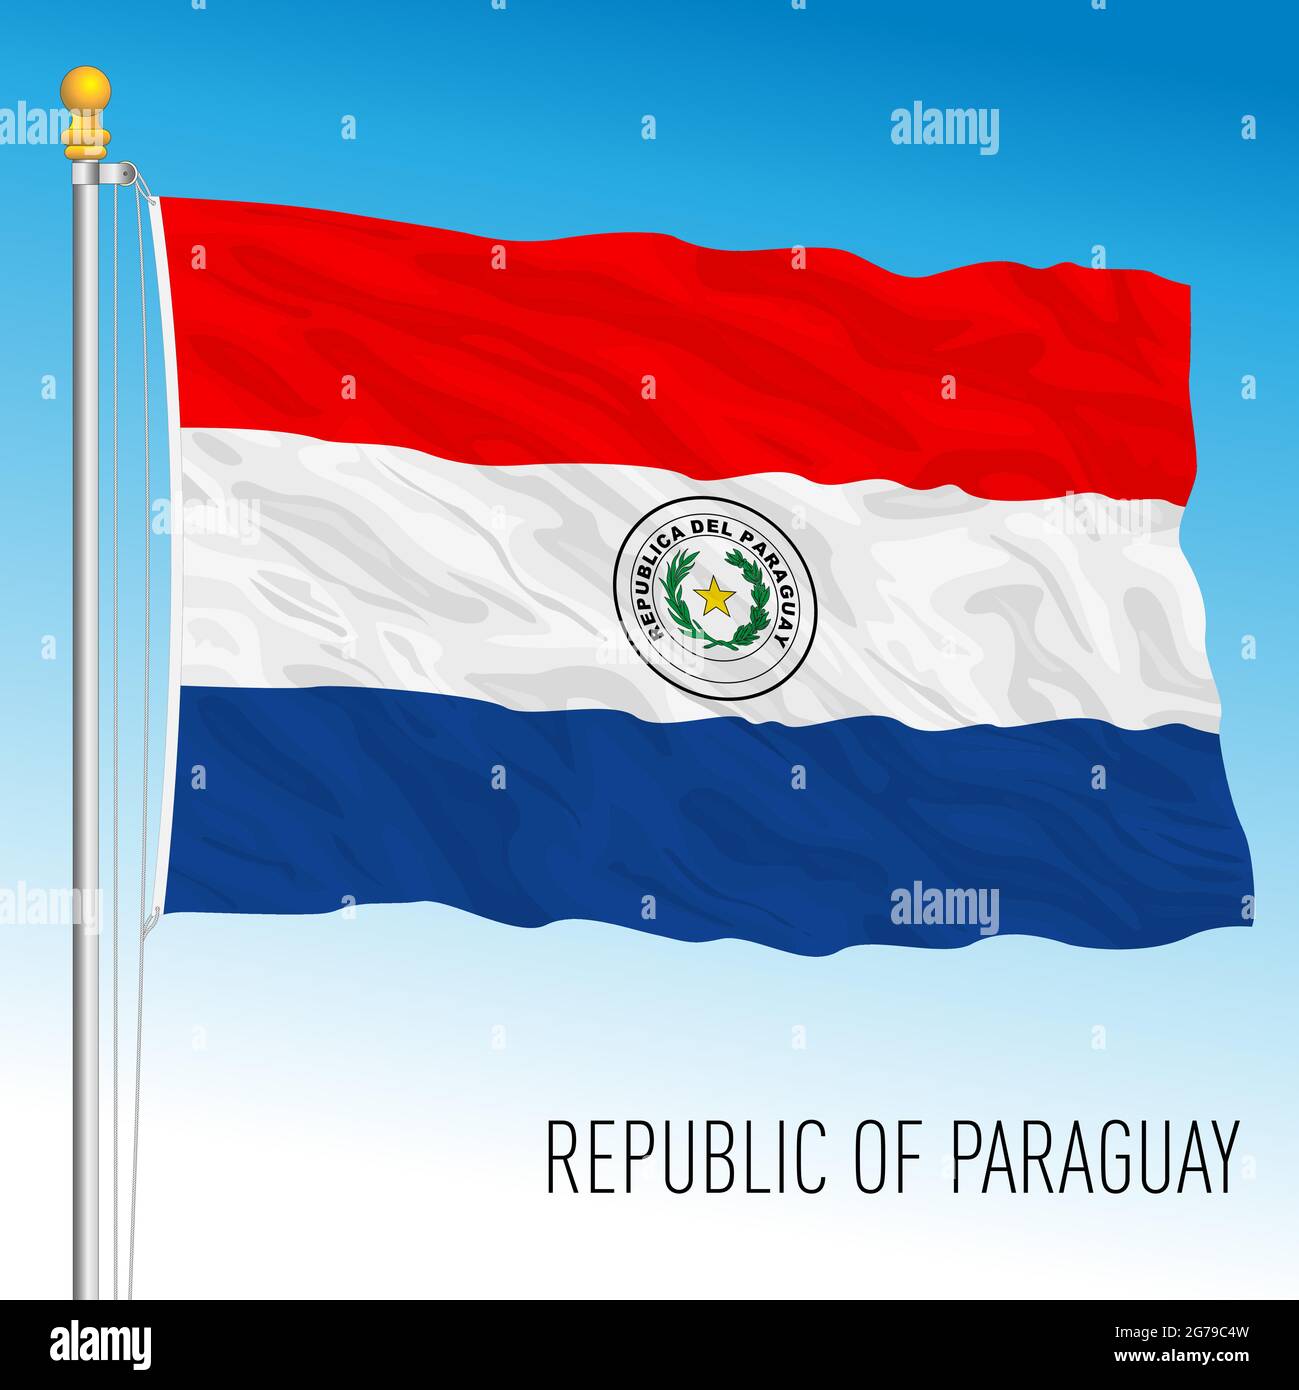 Offizielle Nationalflagge Paraguays, Südamerika, Vektorgrafik, Vorderseite Stock Vektor